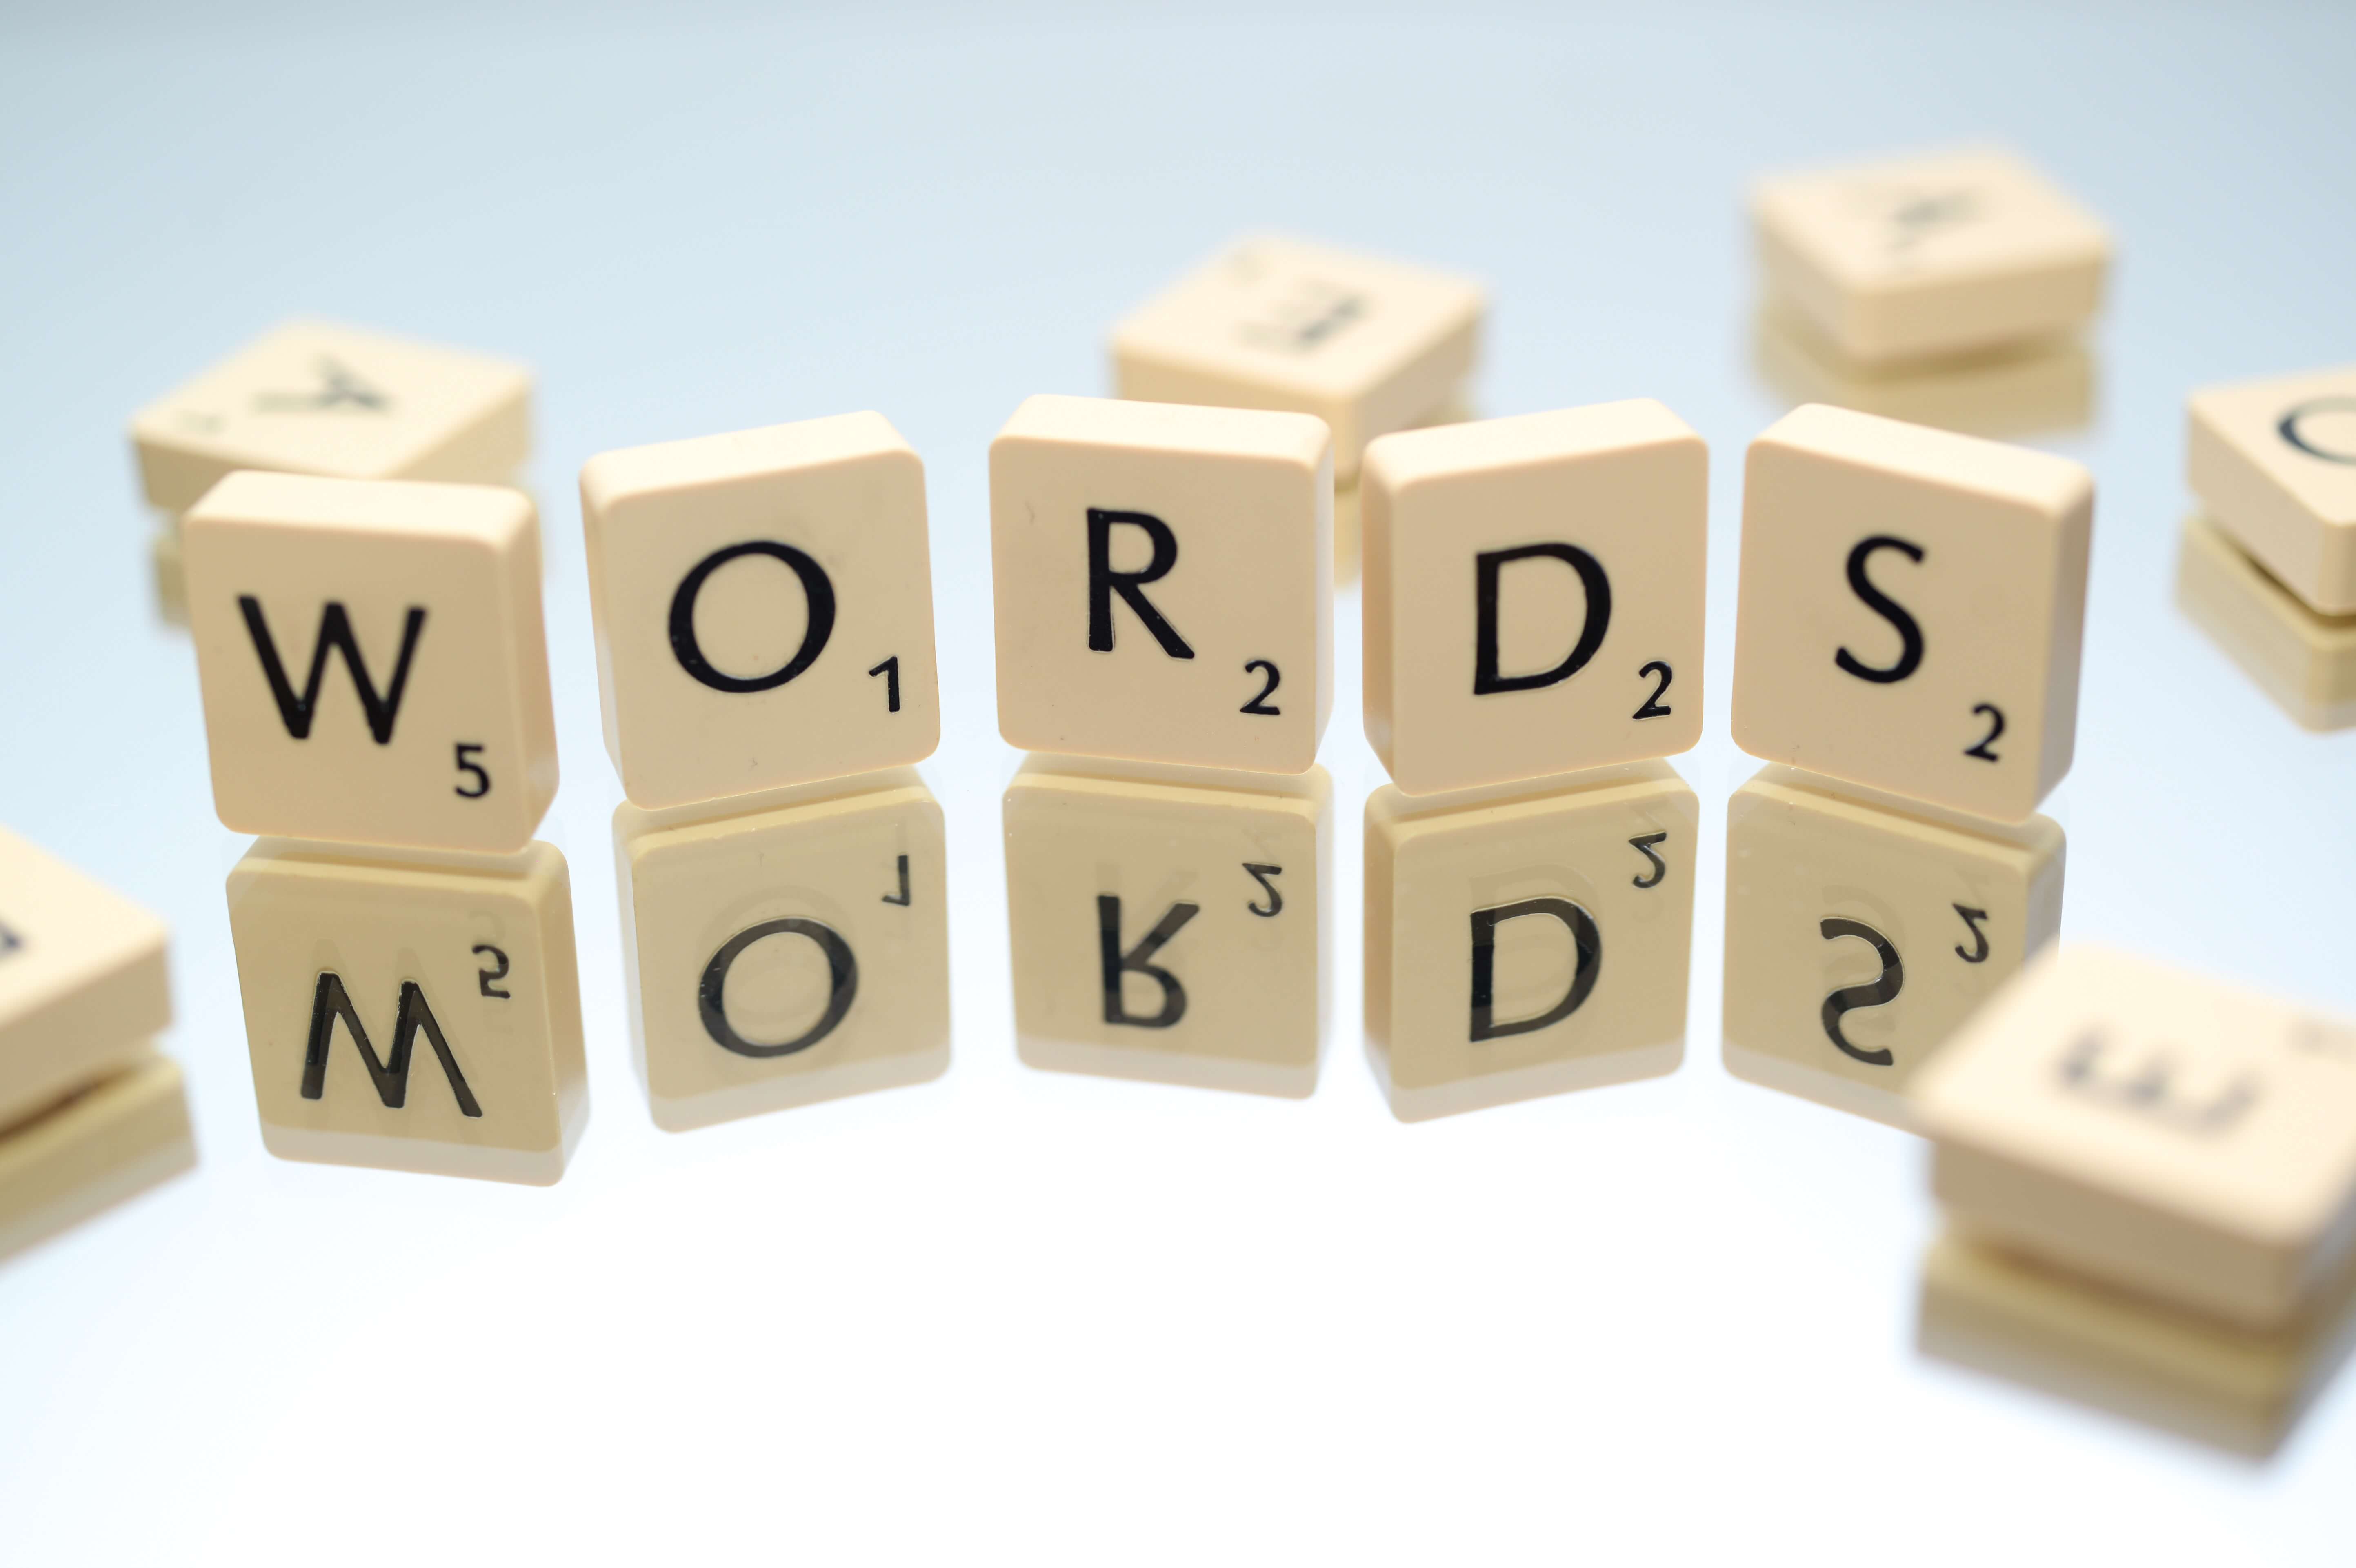 Scrabble blocks spelling 'words'